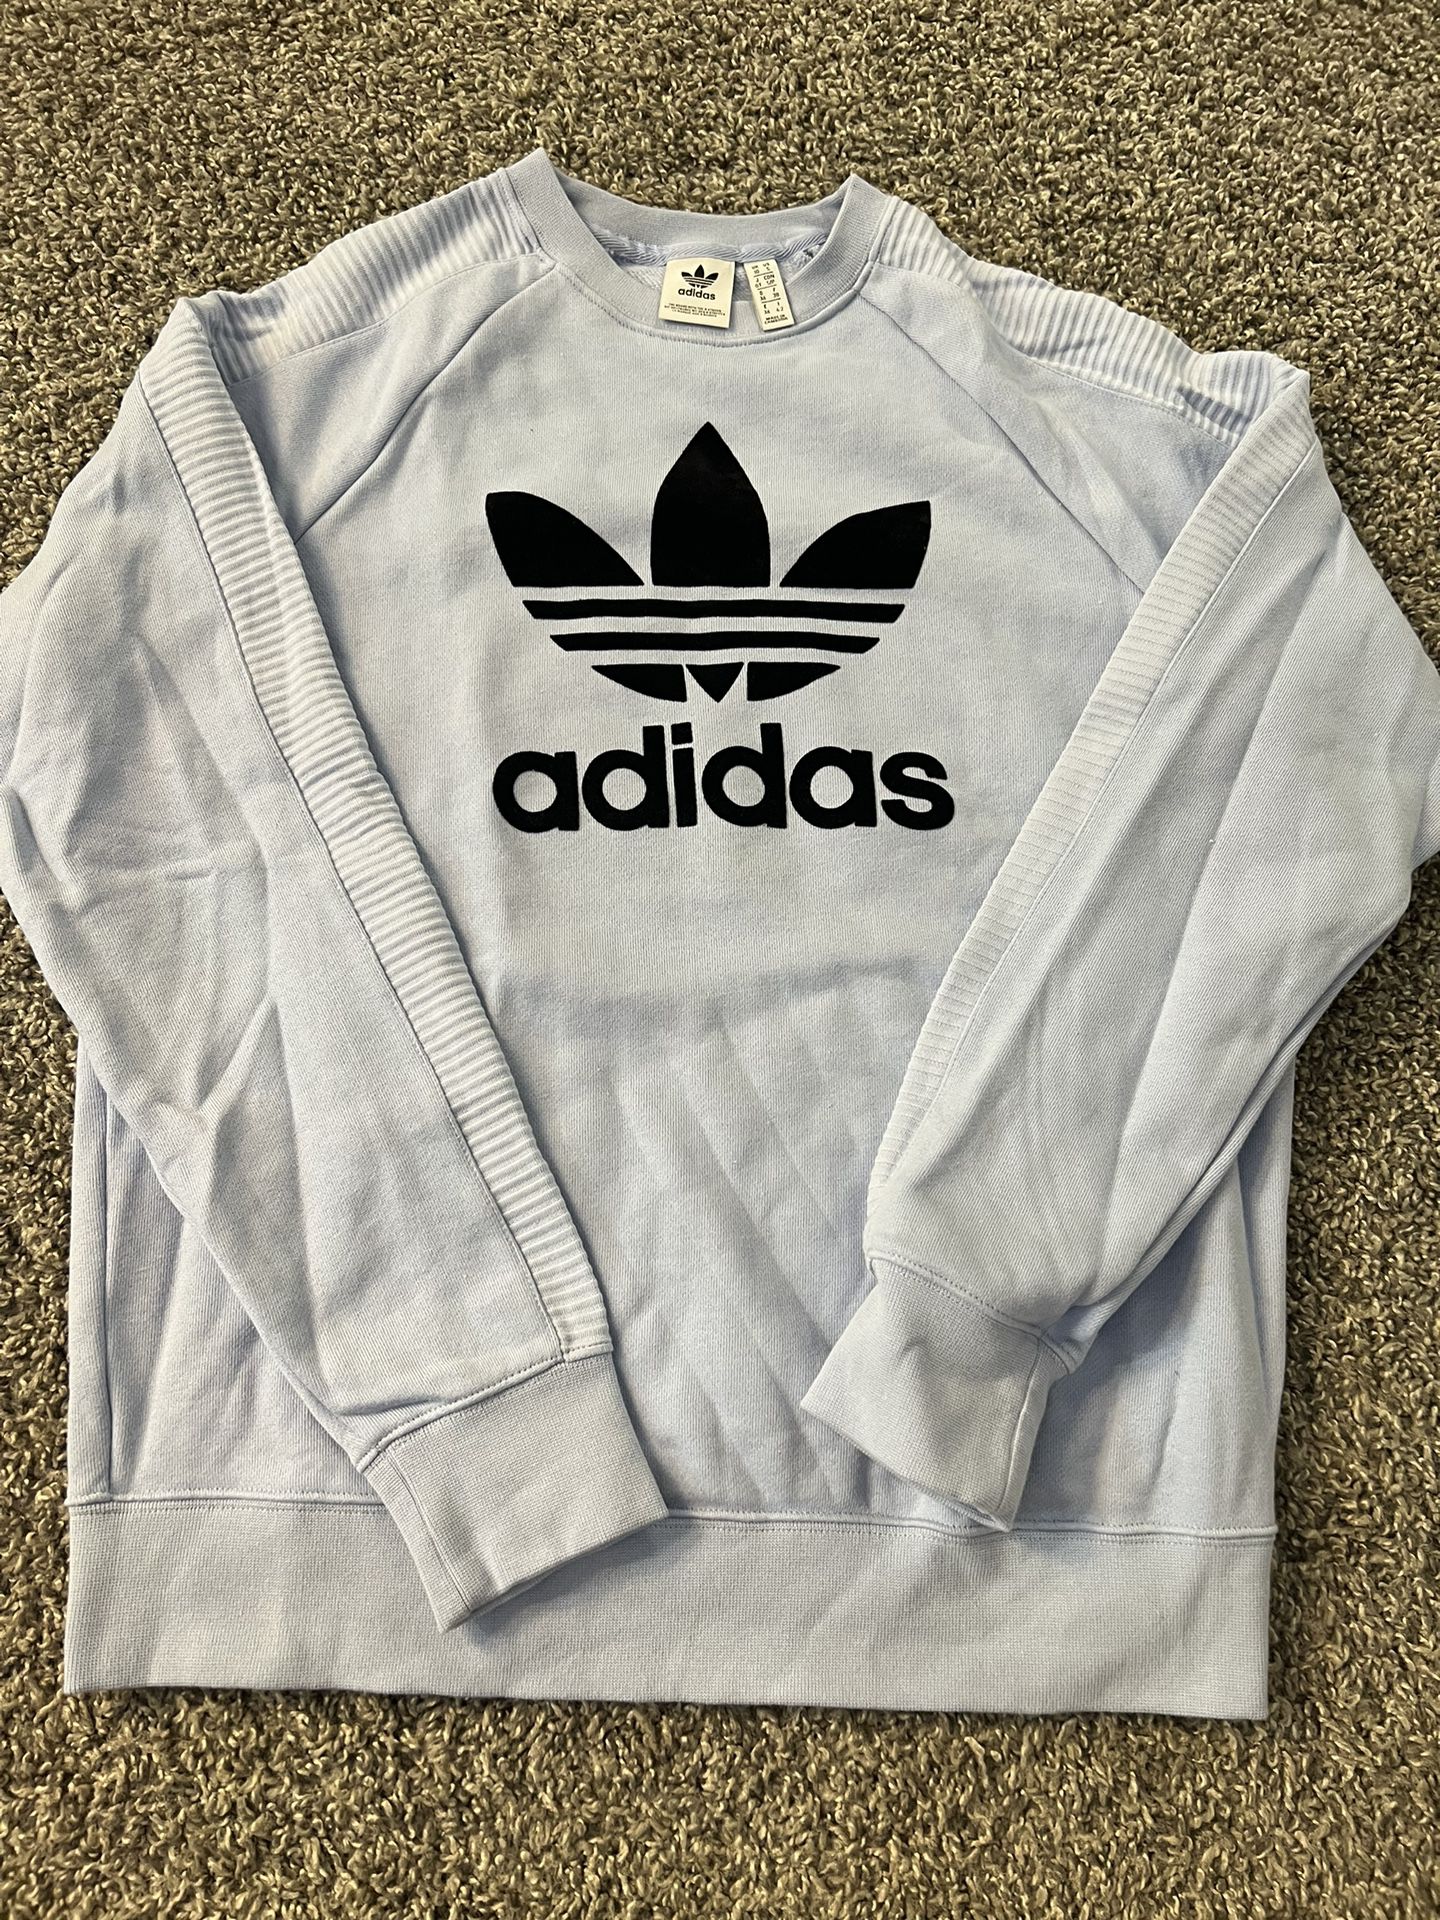 Adidas Women’s Crewneck Sweatshirt Size Small